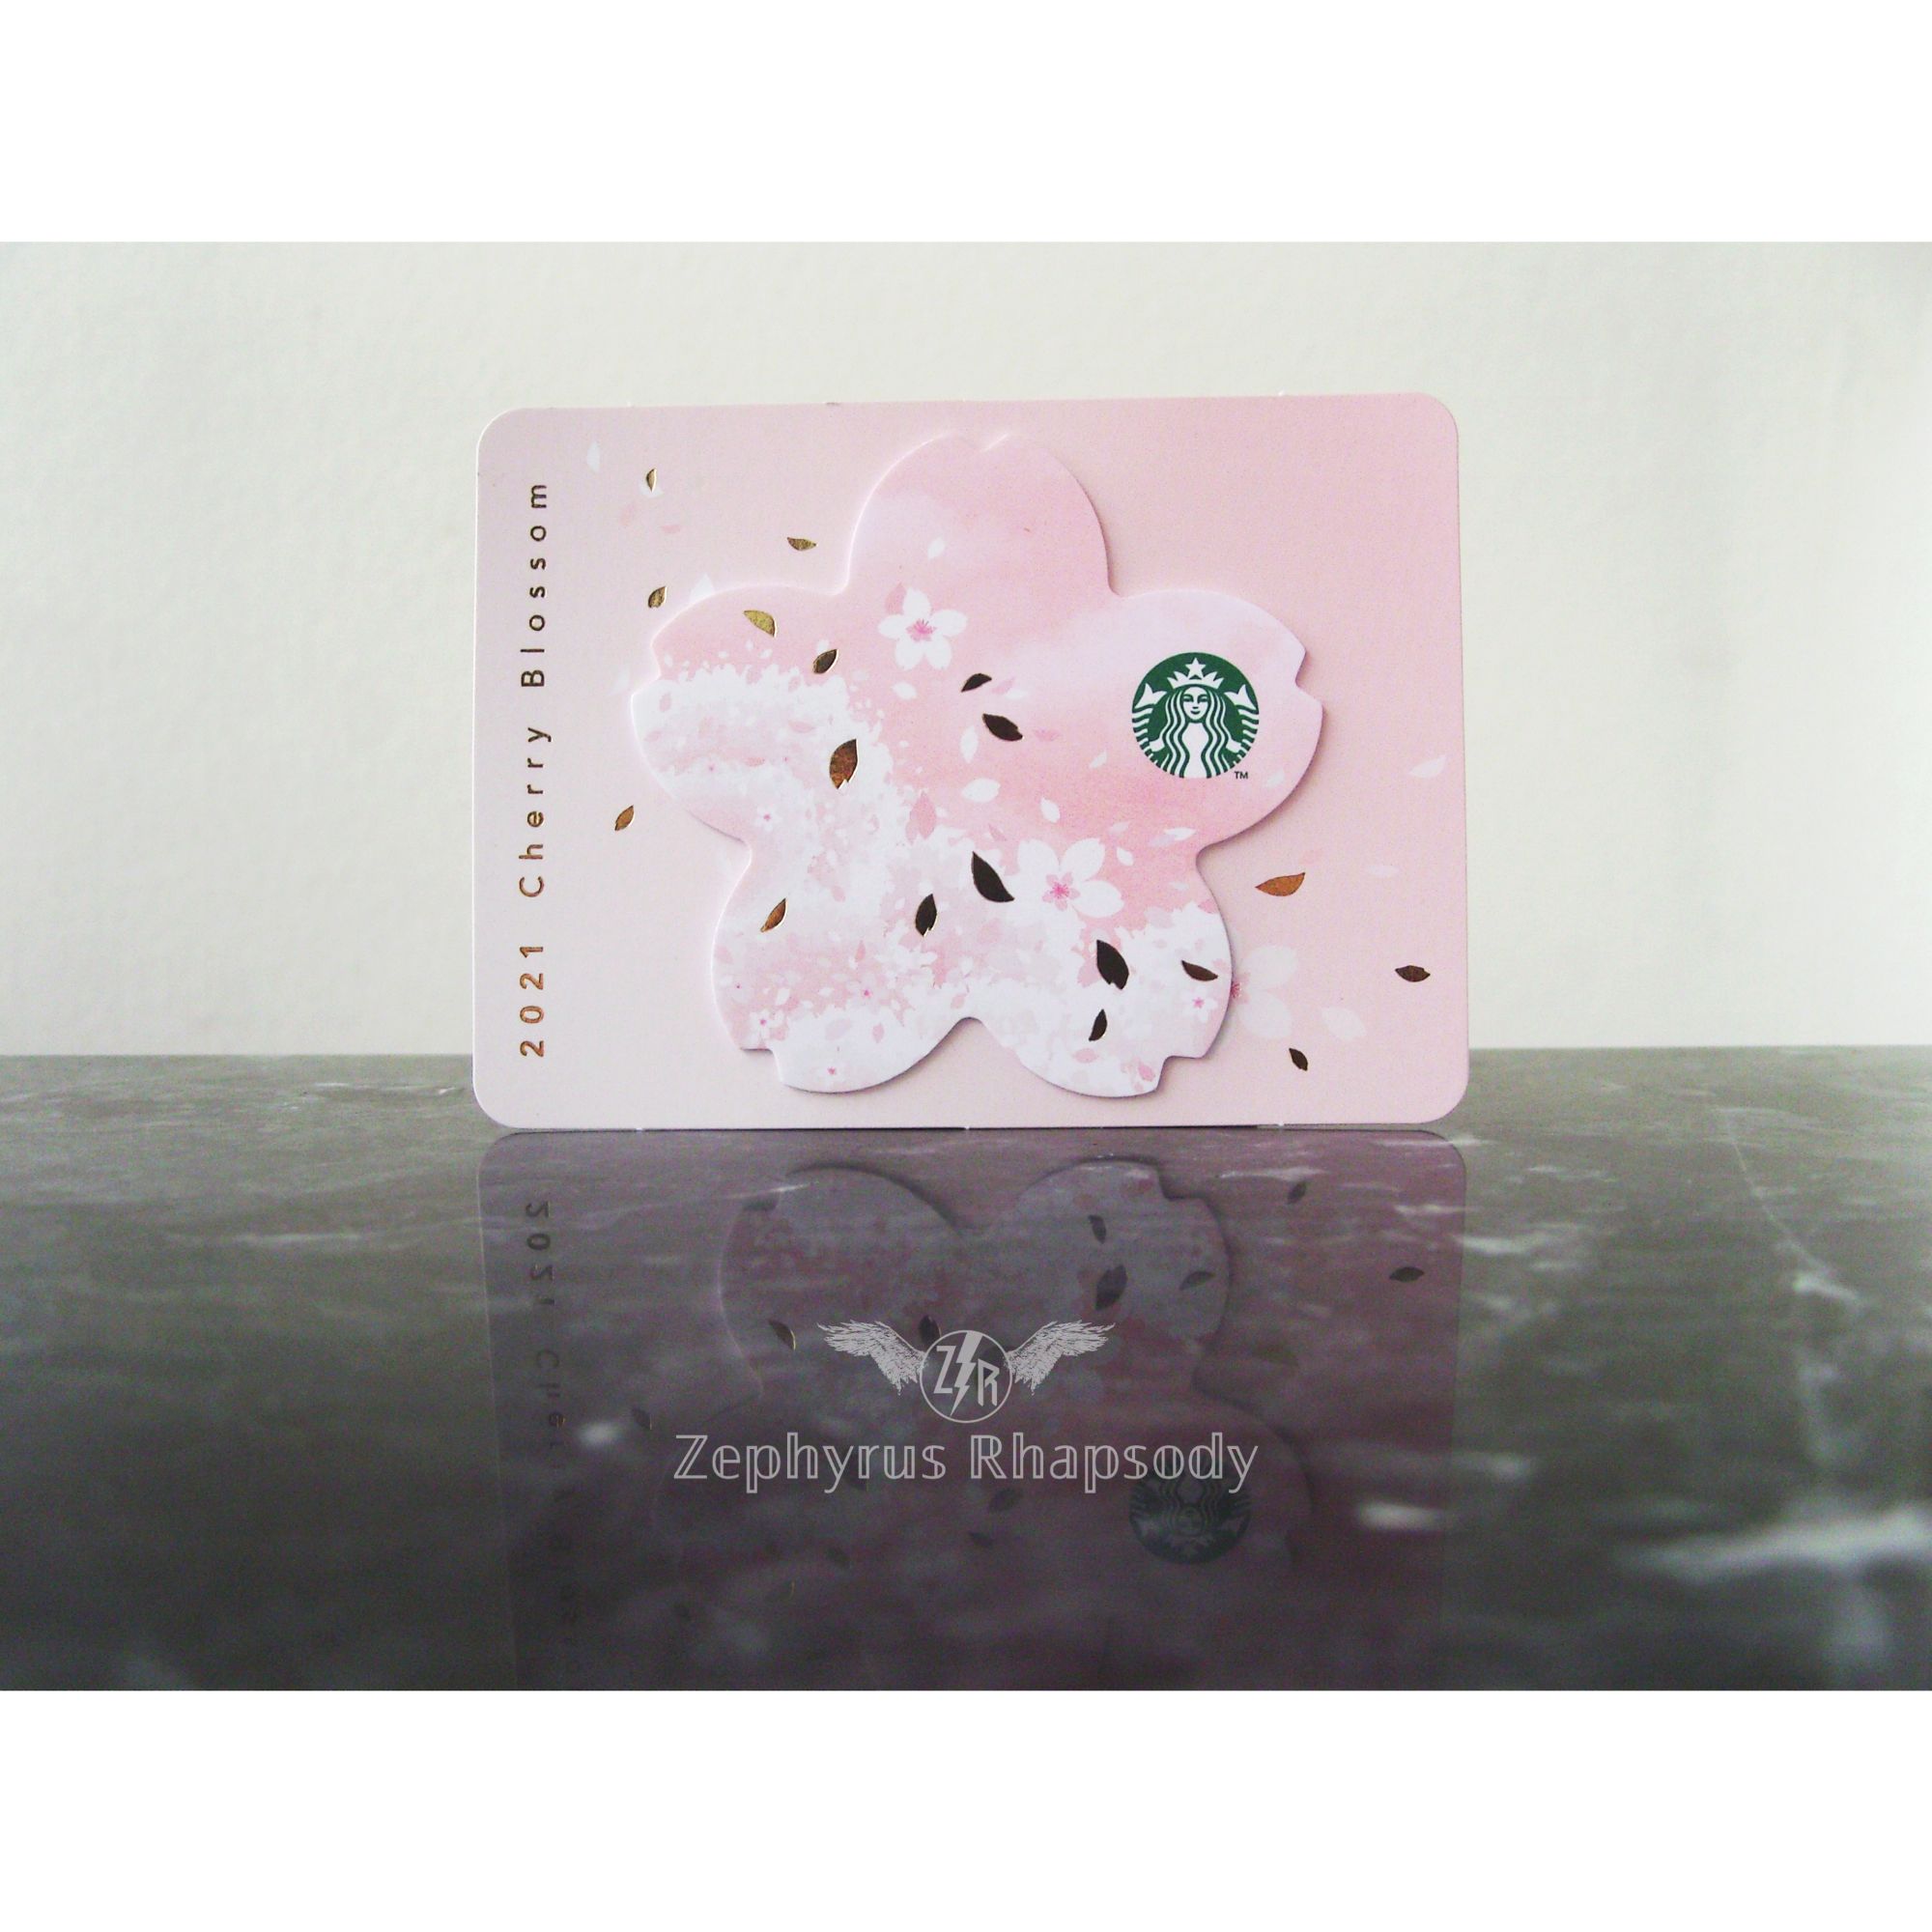 Starbucks card : บัตรสตาร์บักส์ ❀ ลายซากุระ 2021 ❀ﾐ